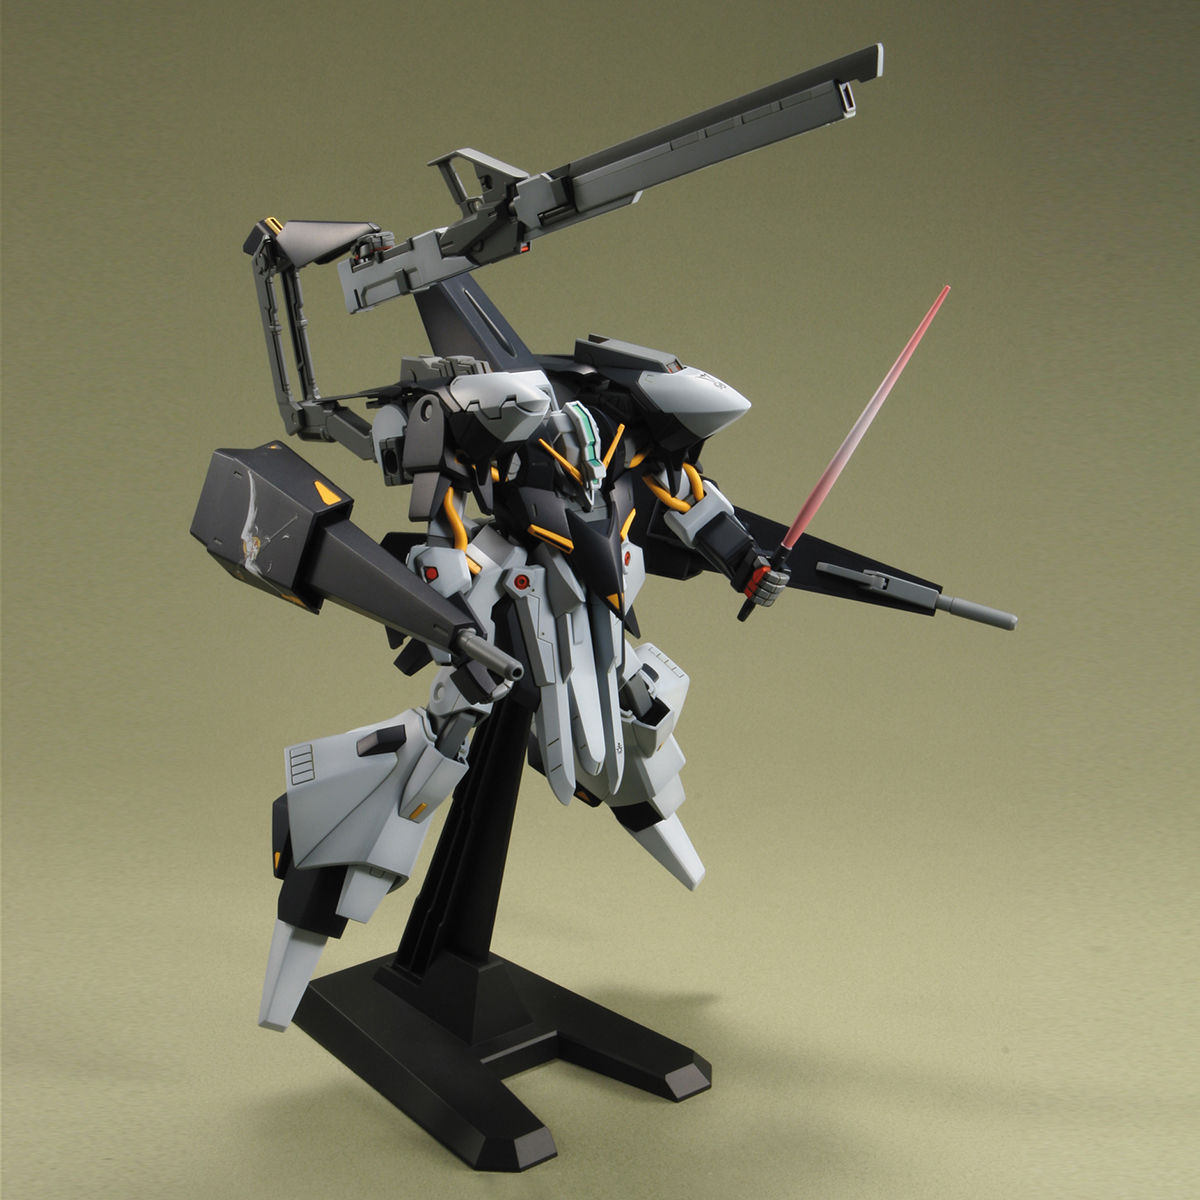 Hguc 73 Orx 005 Gaplant Tr 5 Hrairoo Gundam Pros